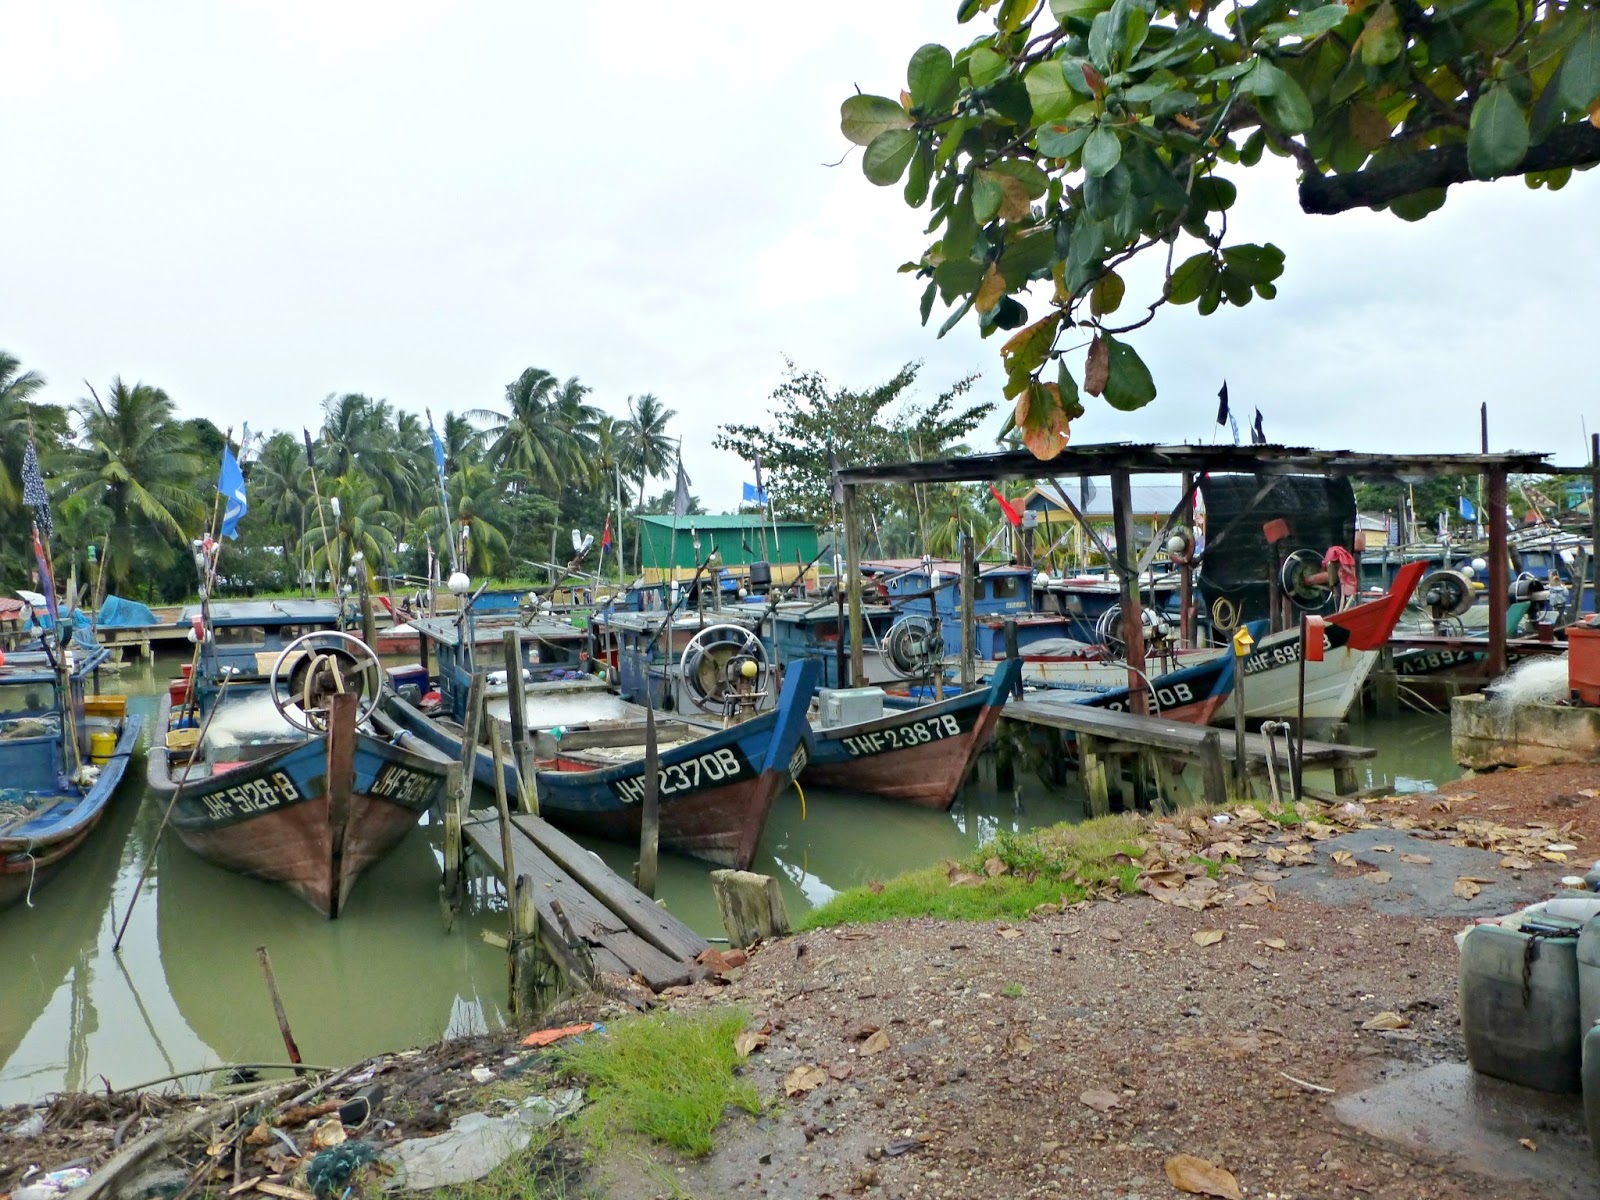 Resepi Asam Pedas Ikan Johor - Rungon h